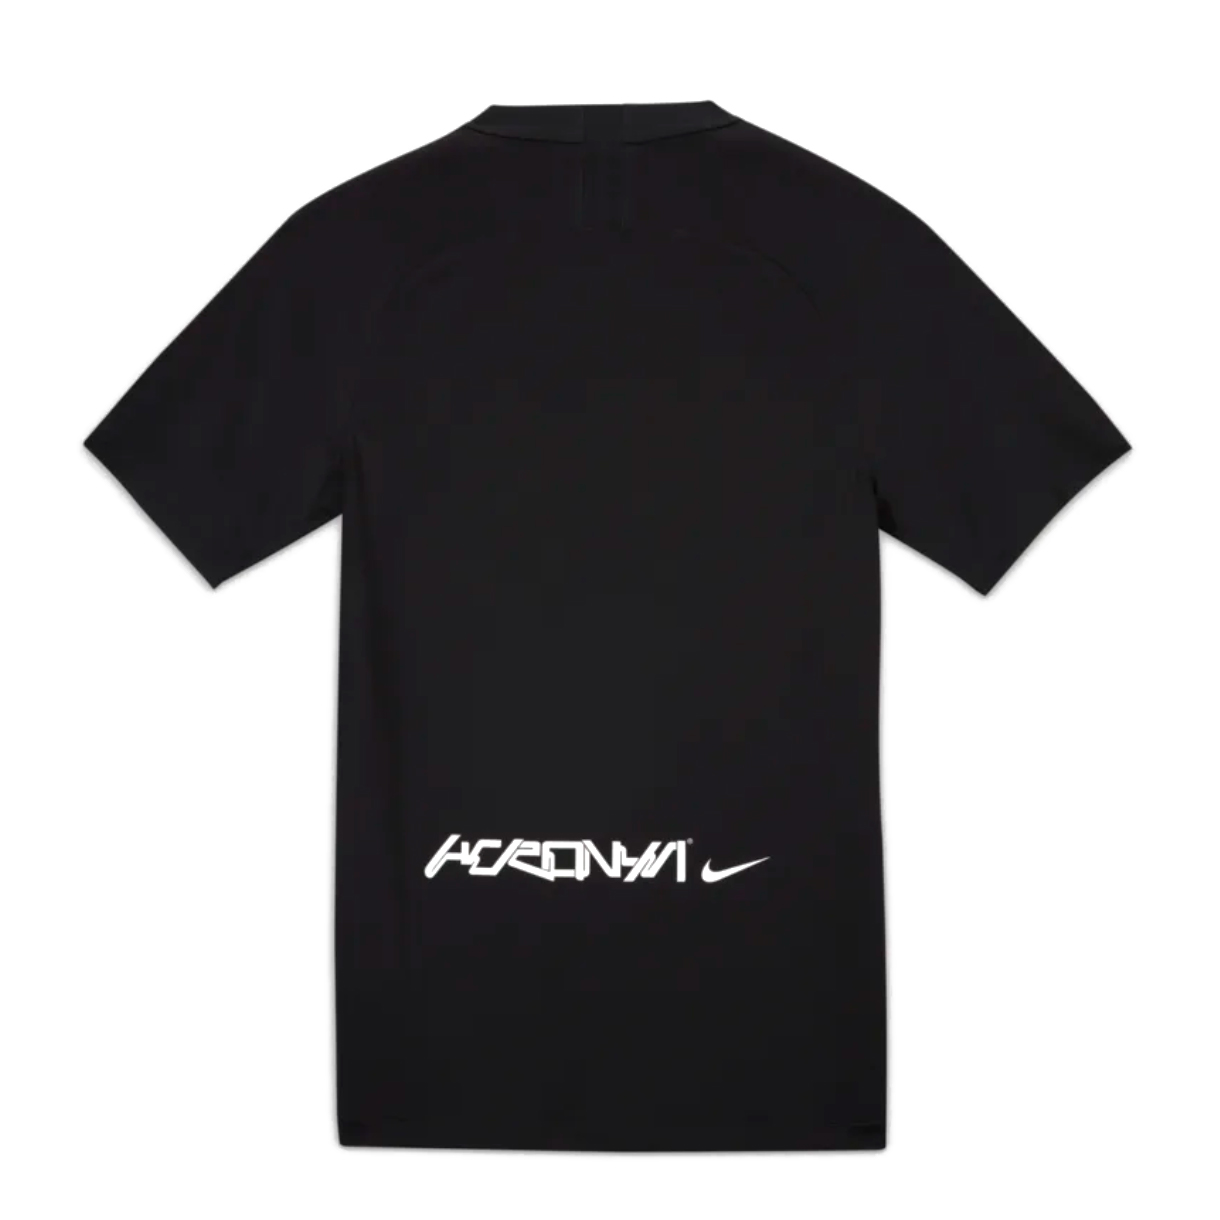 Nike x Acronym Stadium Uniform Black